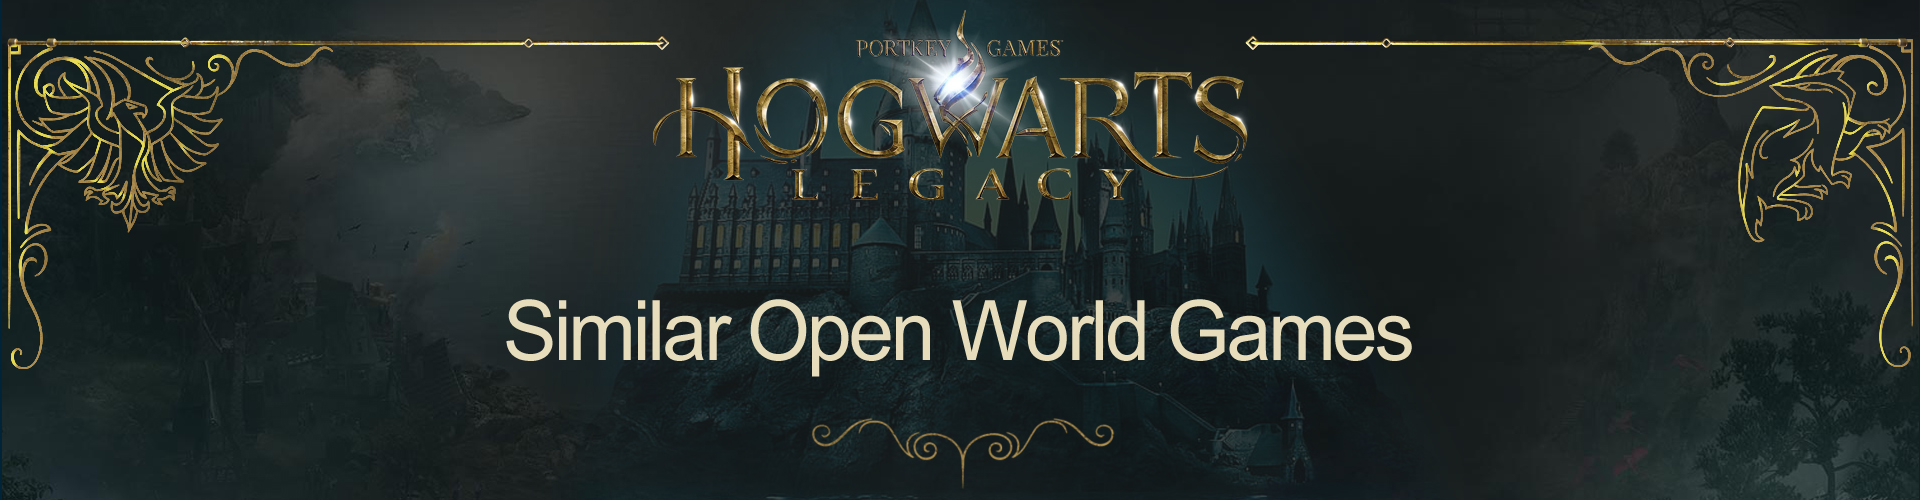 Open-World Games Similar to Hogwarts Legacy